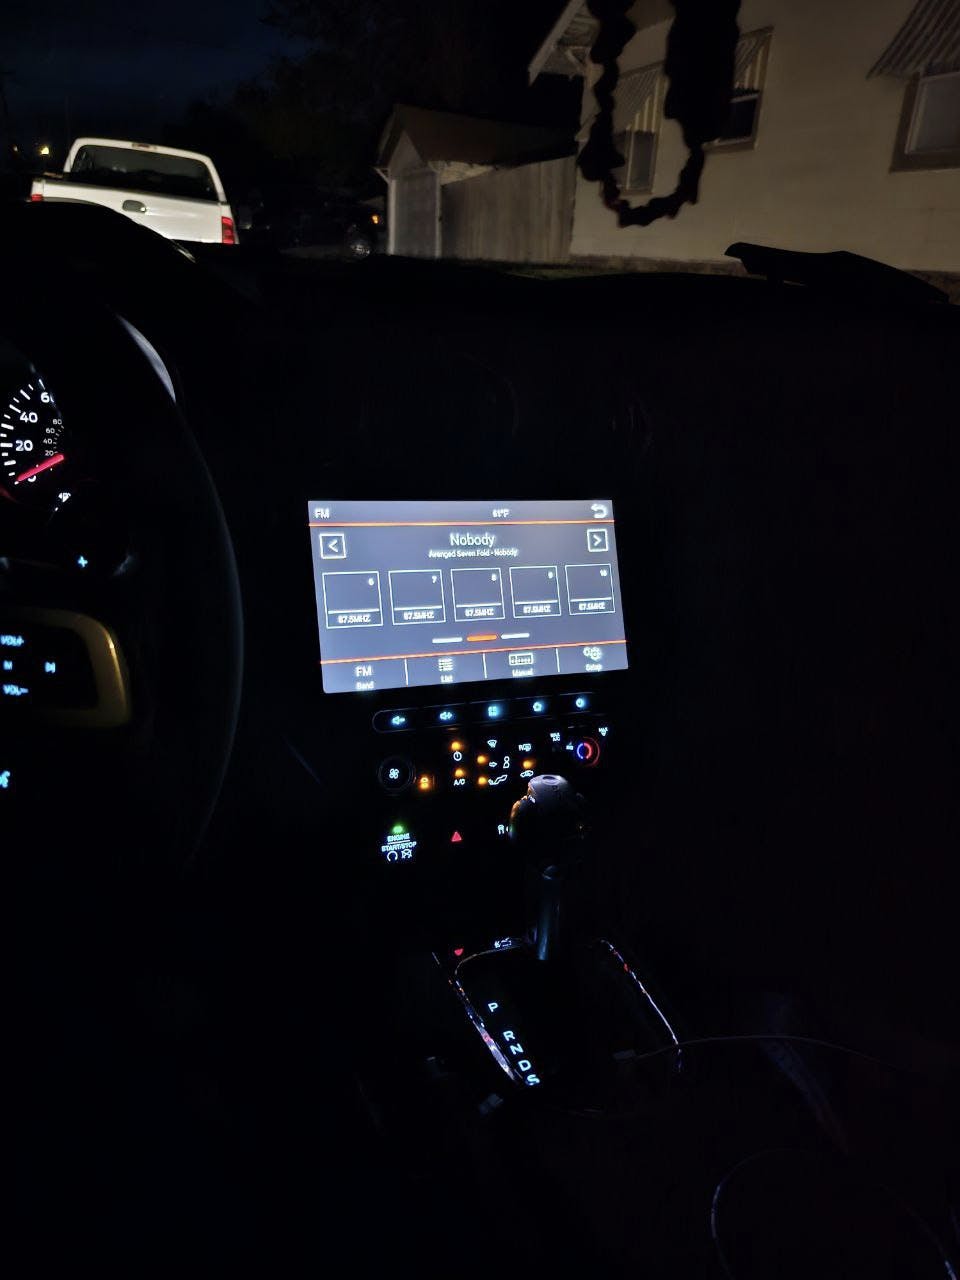 NEW!* Dynavin 8 D8-MBC Plus Radio Navigation System for Mercedes C